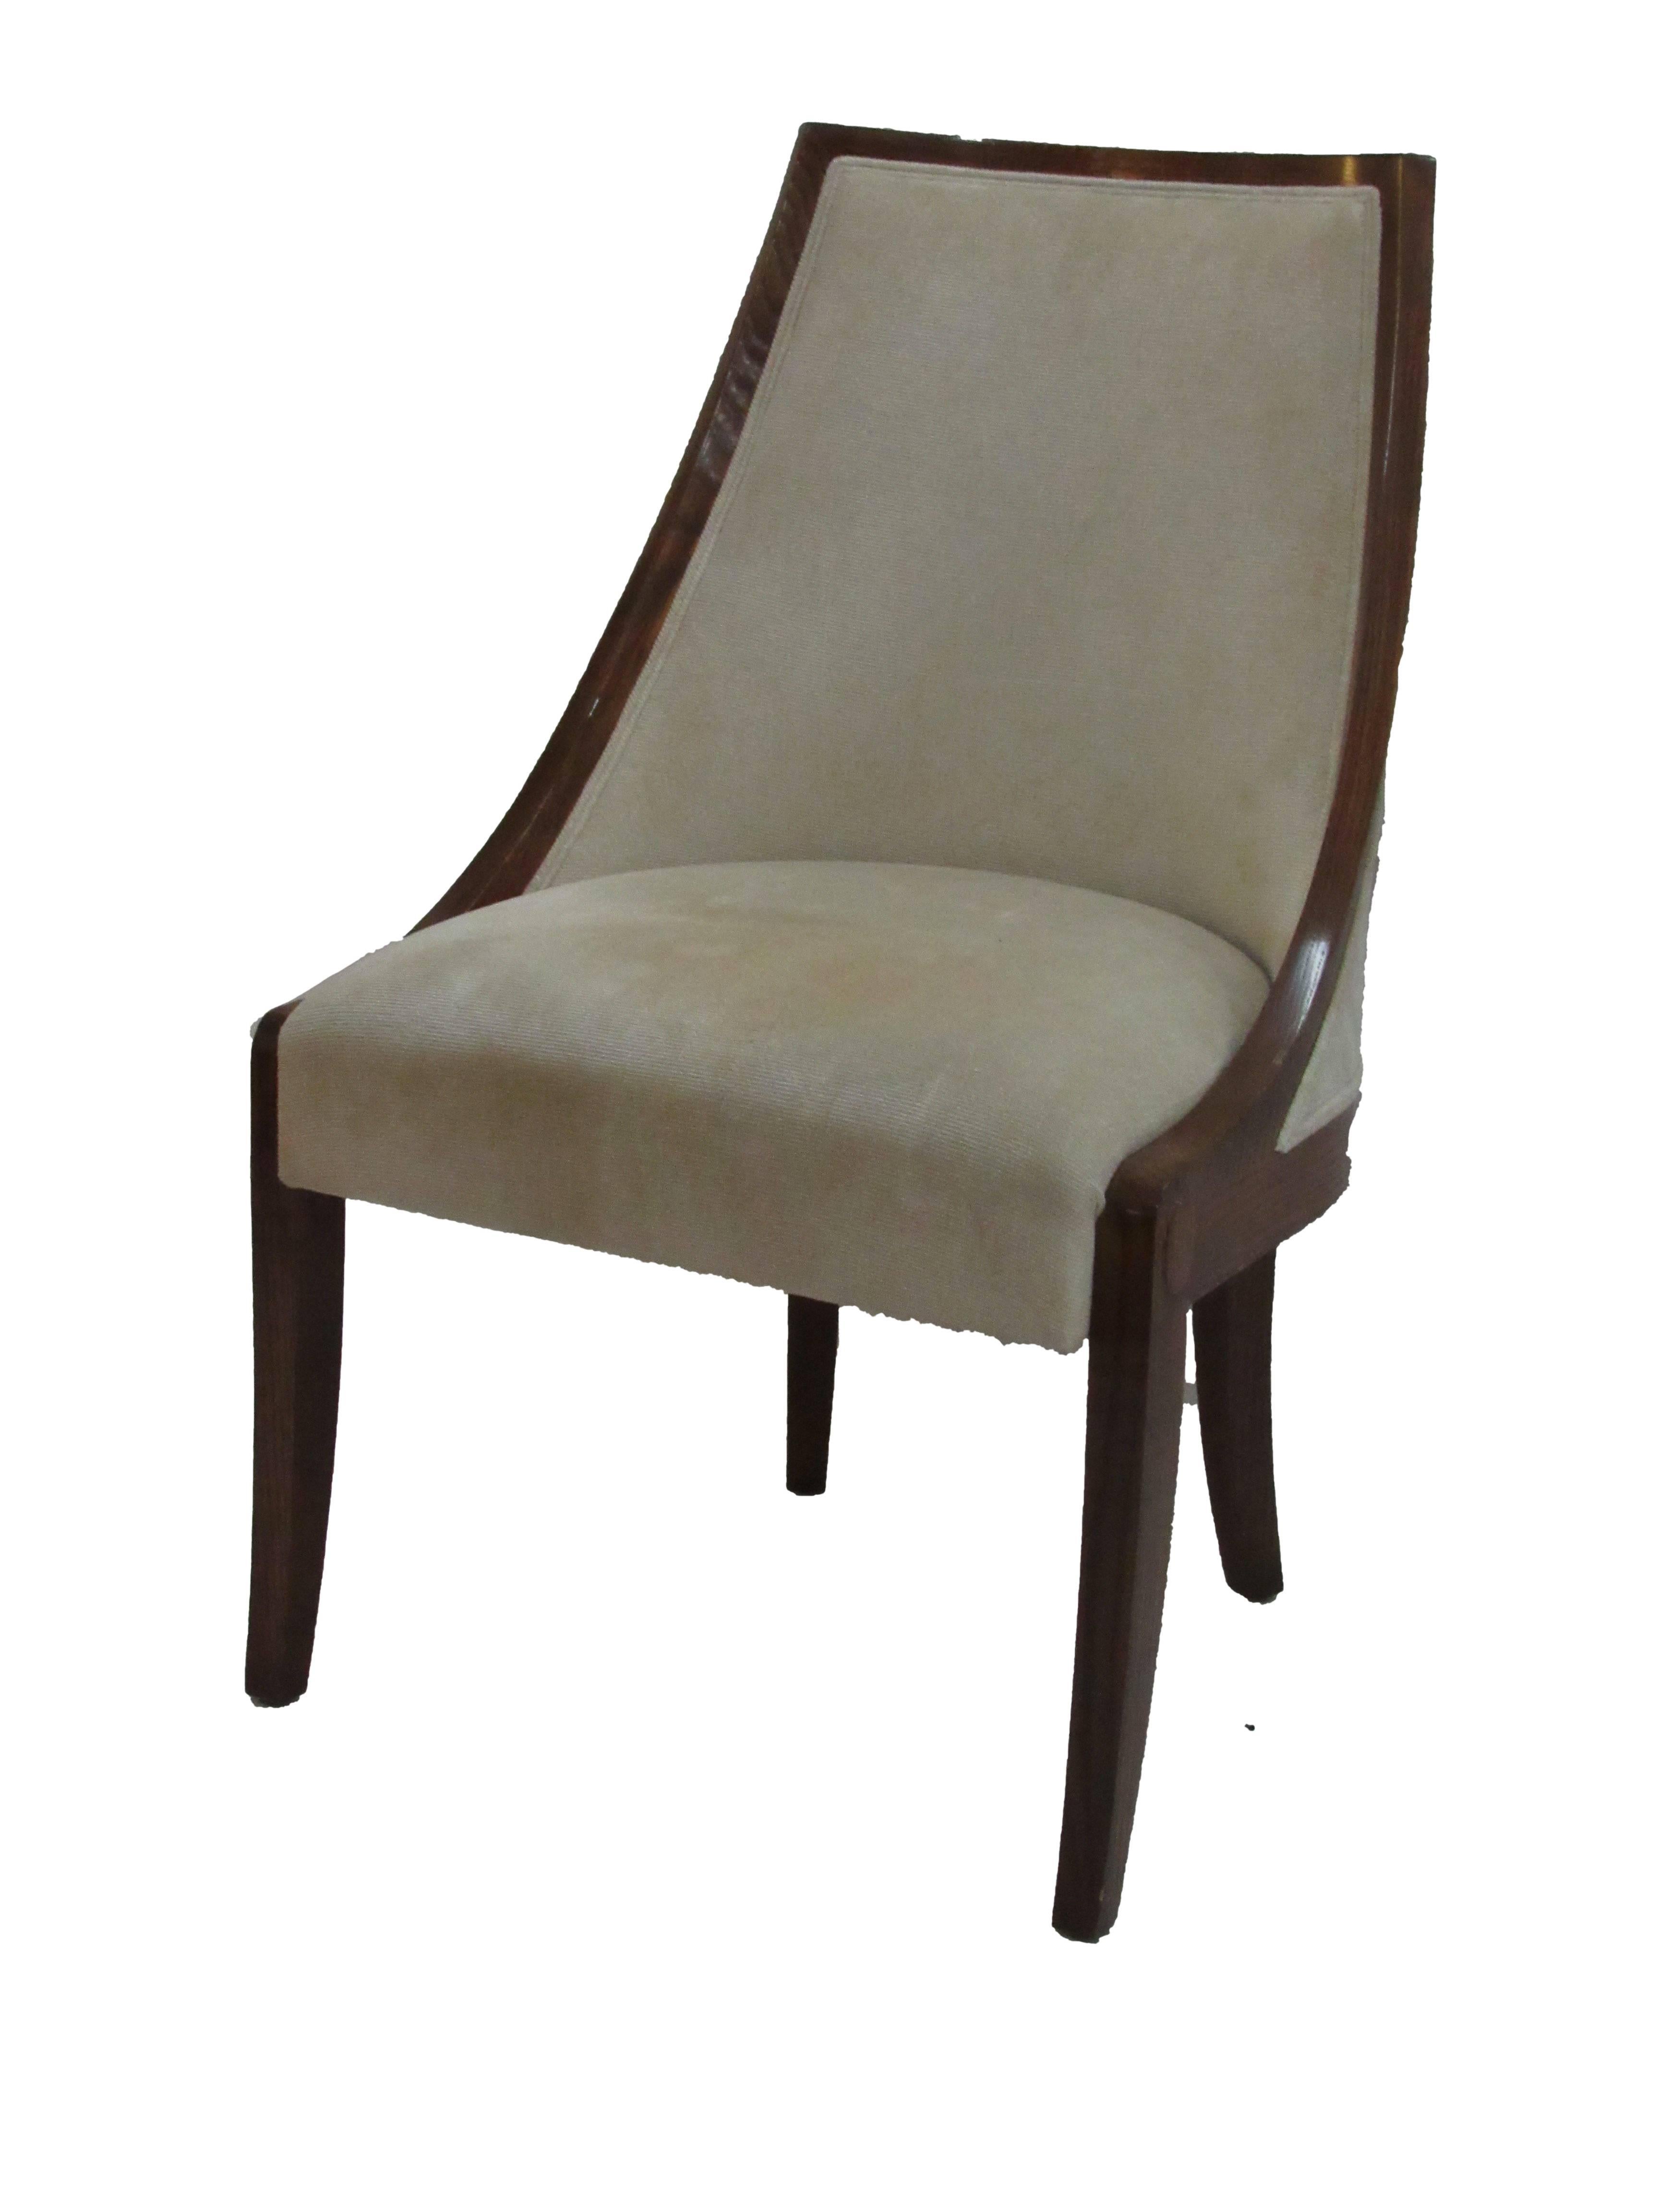 Velvet Contemporary Ram's Chair Created by J. Robert Scott Designed by Peter Marino For Sale